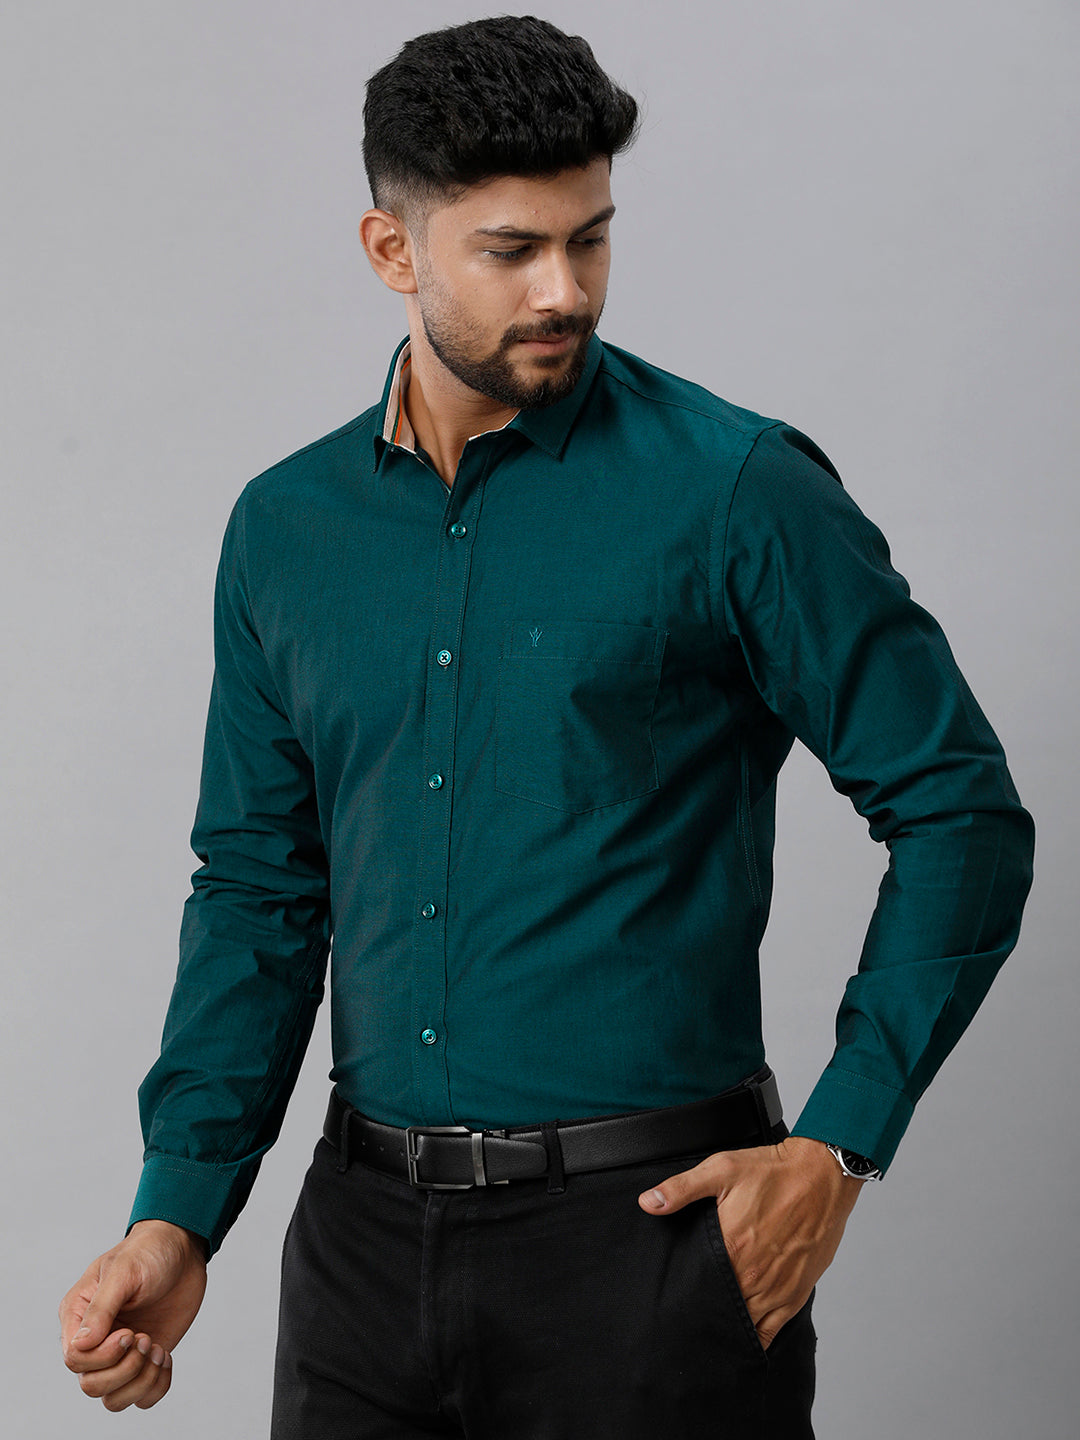 Mens Premium Cotton Formal Shirt Full Sleeves Dark Green MH G116-Side view